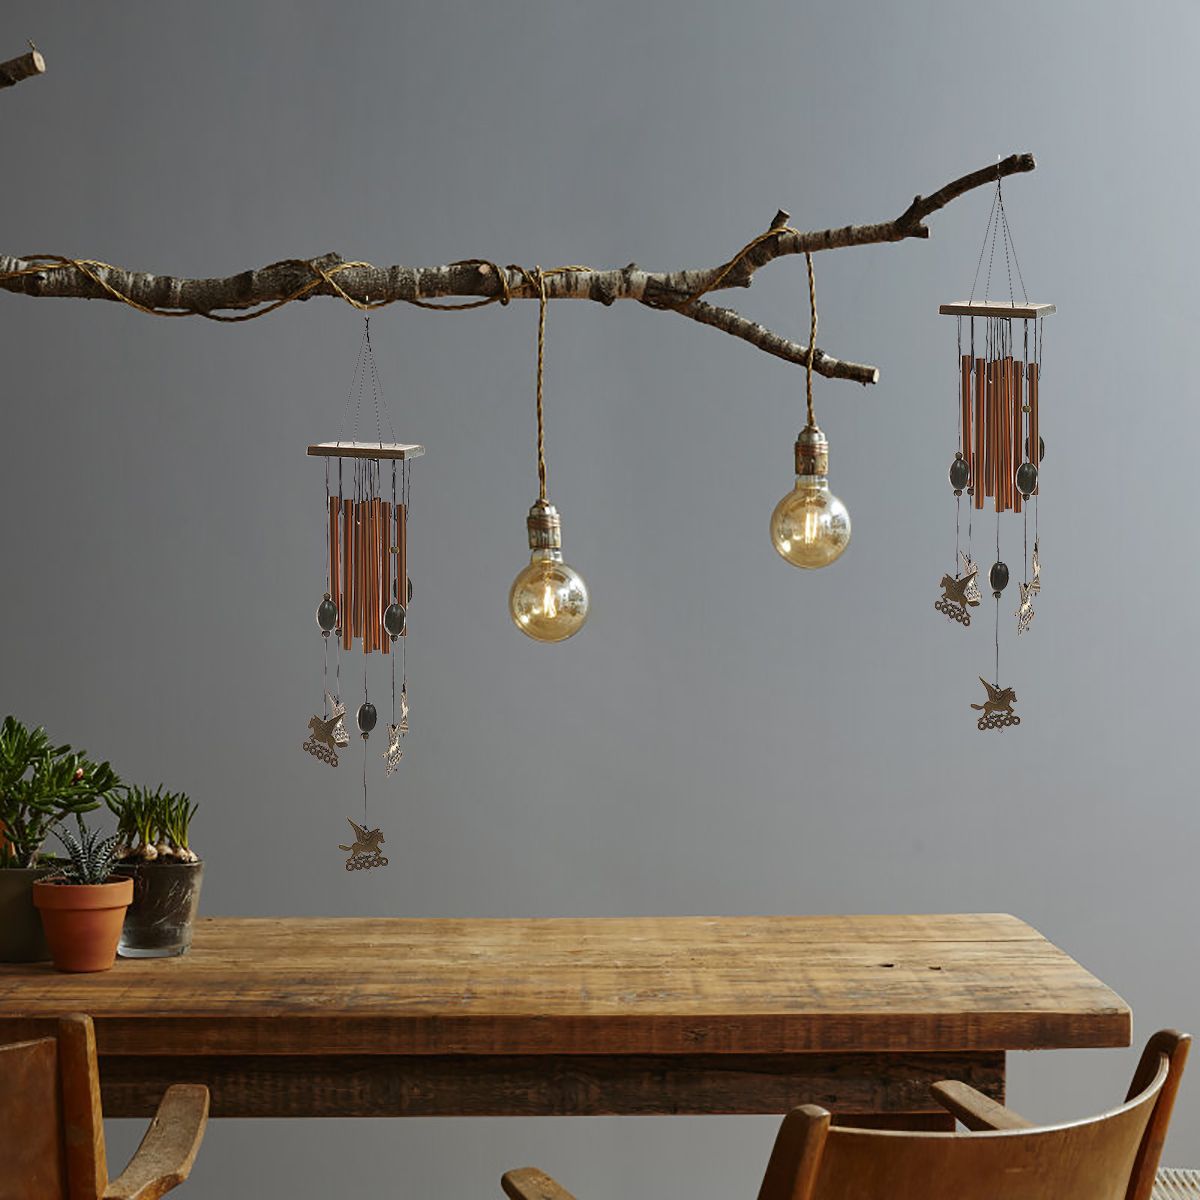 Wind-Chimes-Bells-Tubes-Antirust-Copper-Ornament-Outdoor-Yard-Home-Garden-Decoration-1723061